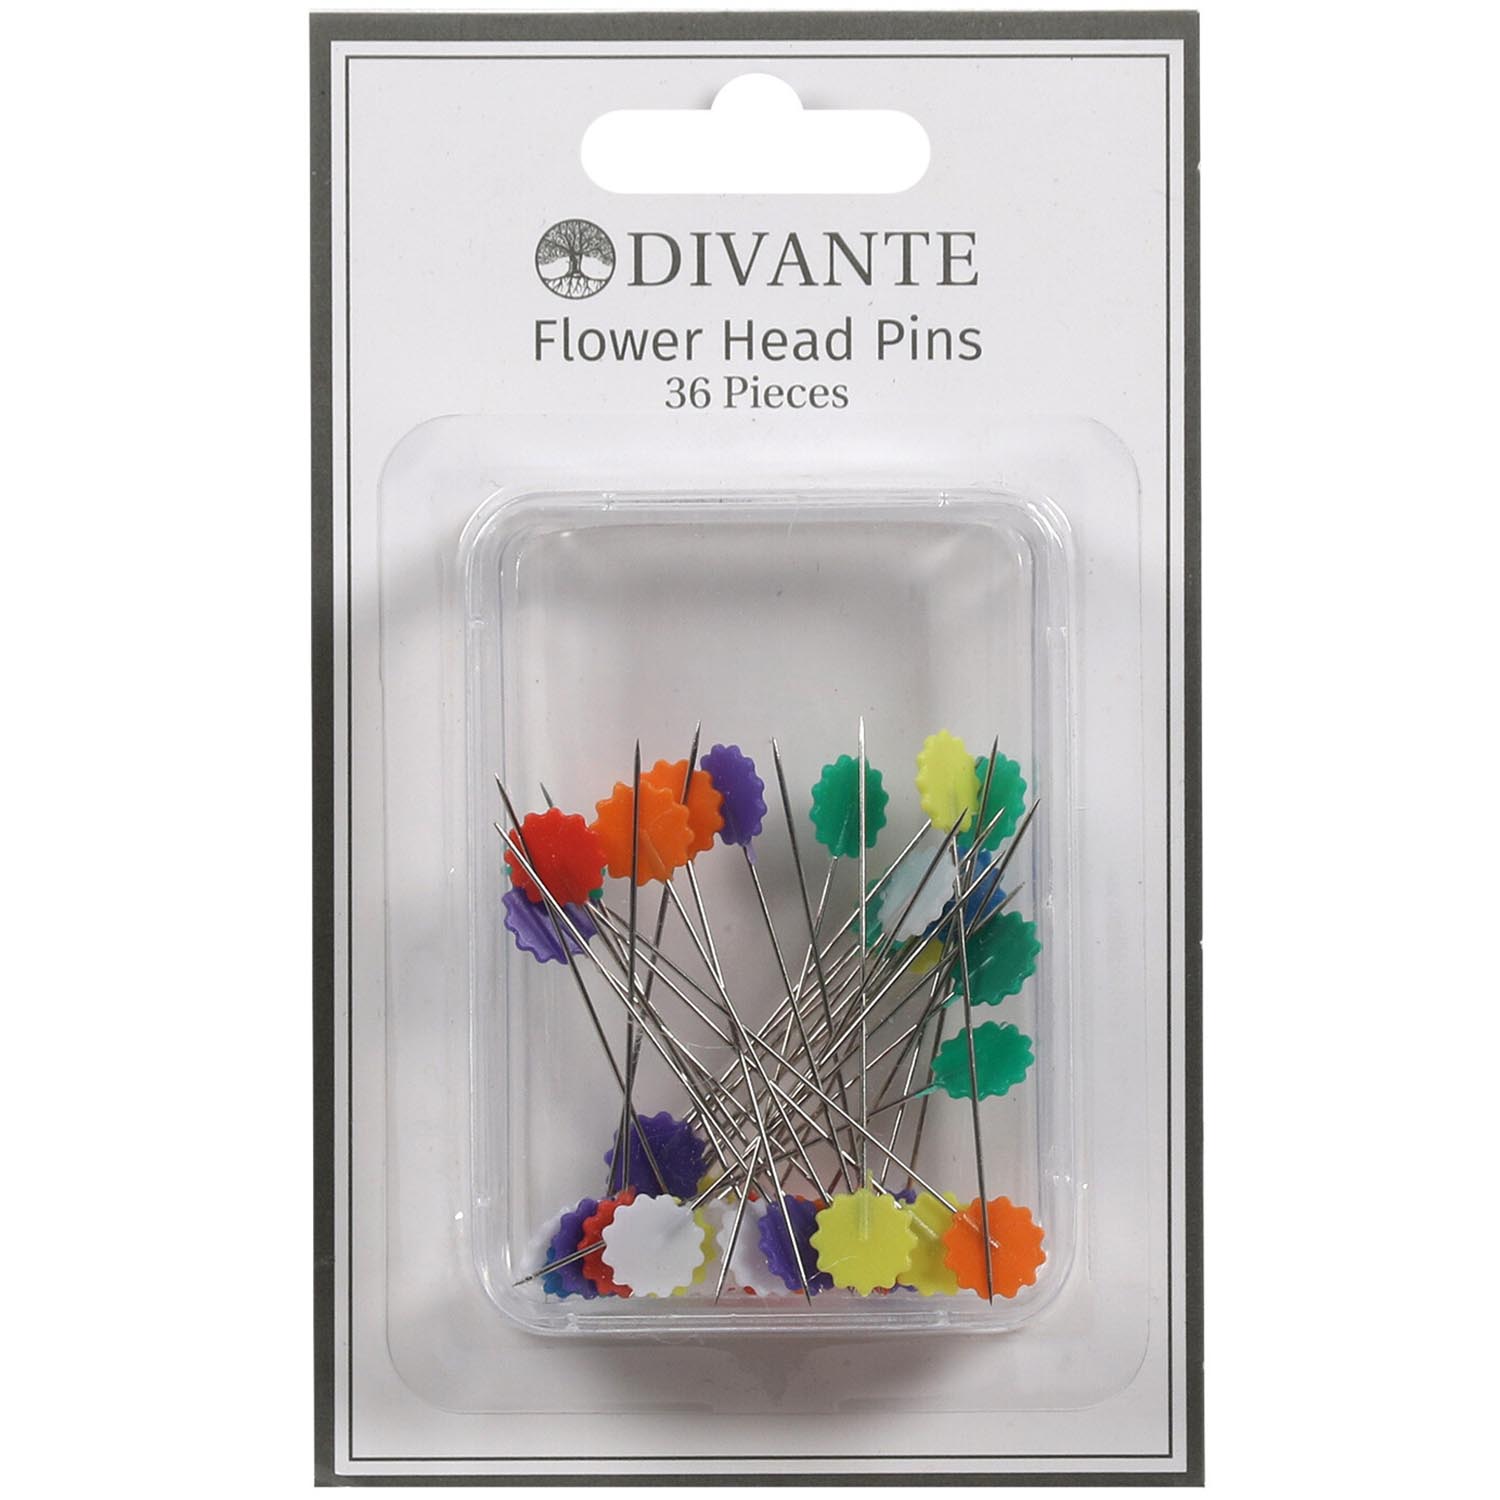 Divante Flower Head Pins 36 Pack Image